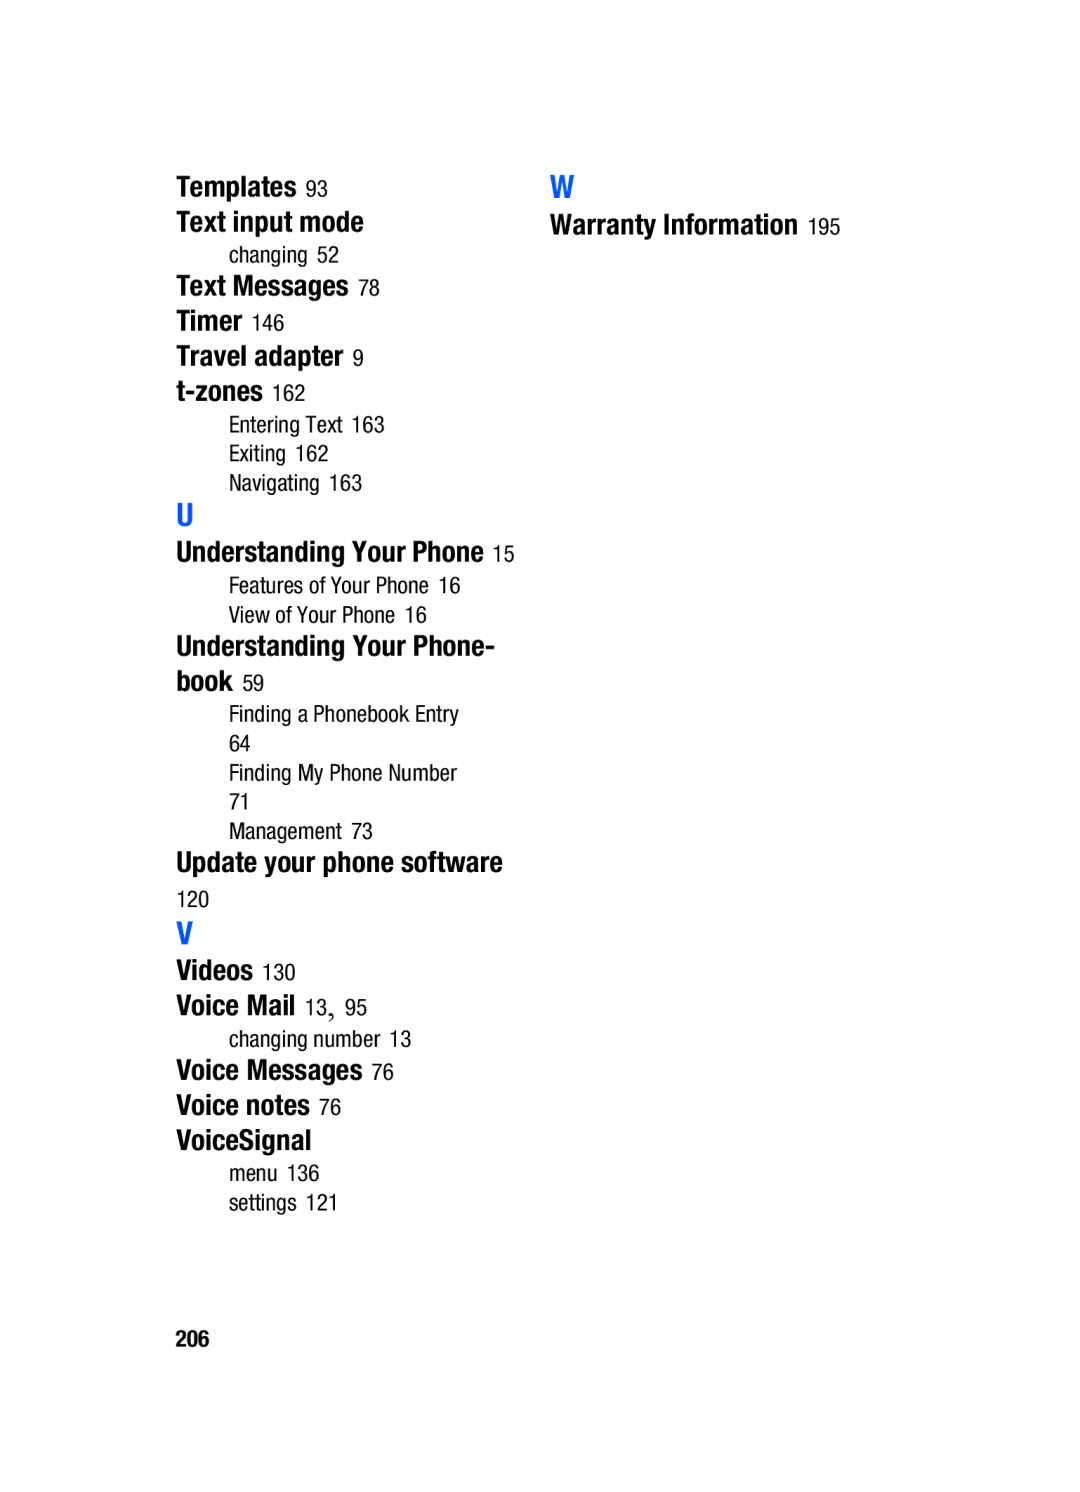 Samsung SGH-T519 Templates Text input mode, Understanding Your Phone- book, Videos Voice Mail 13, Warranty Information 